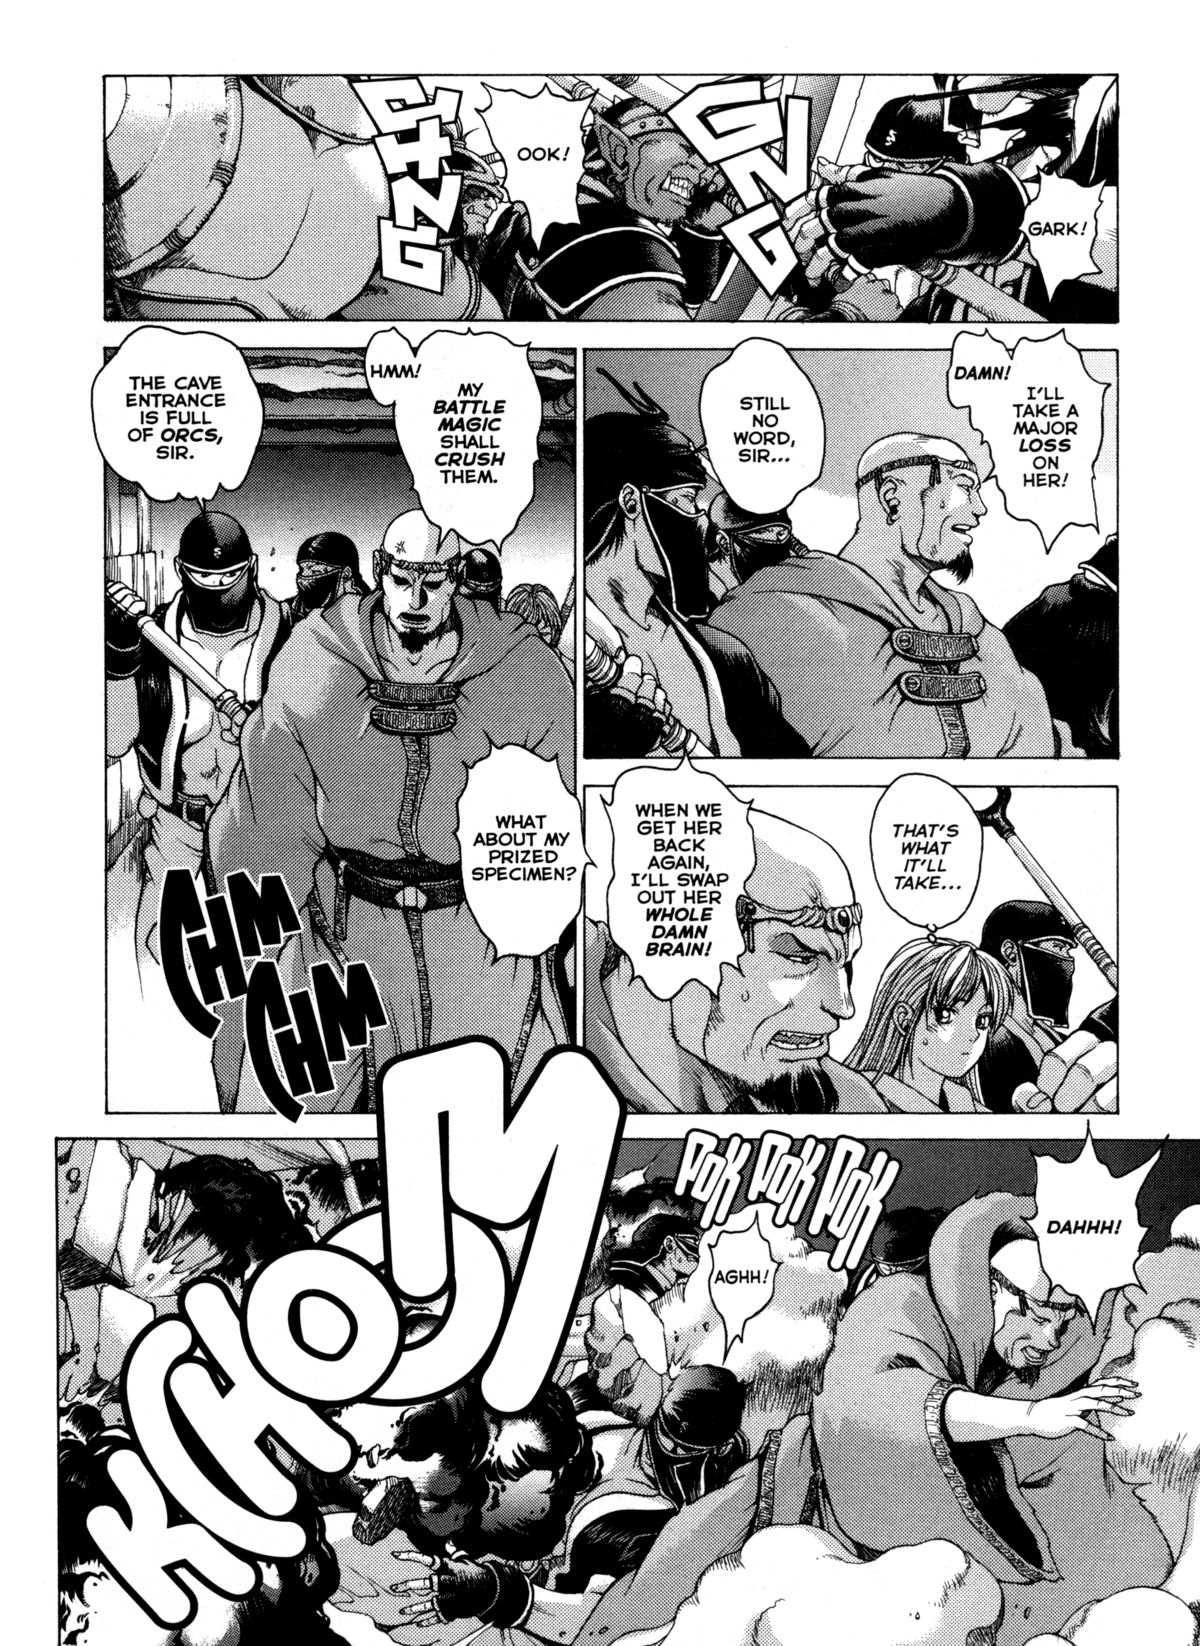 [Kozo Yohei] Spunky Knight XXX 6 [English] 